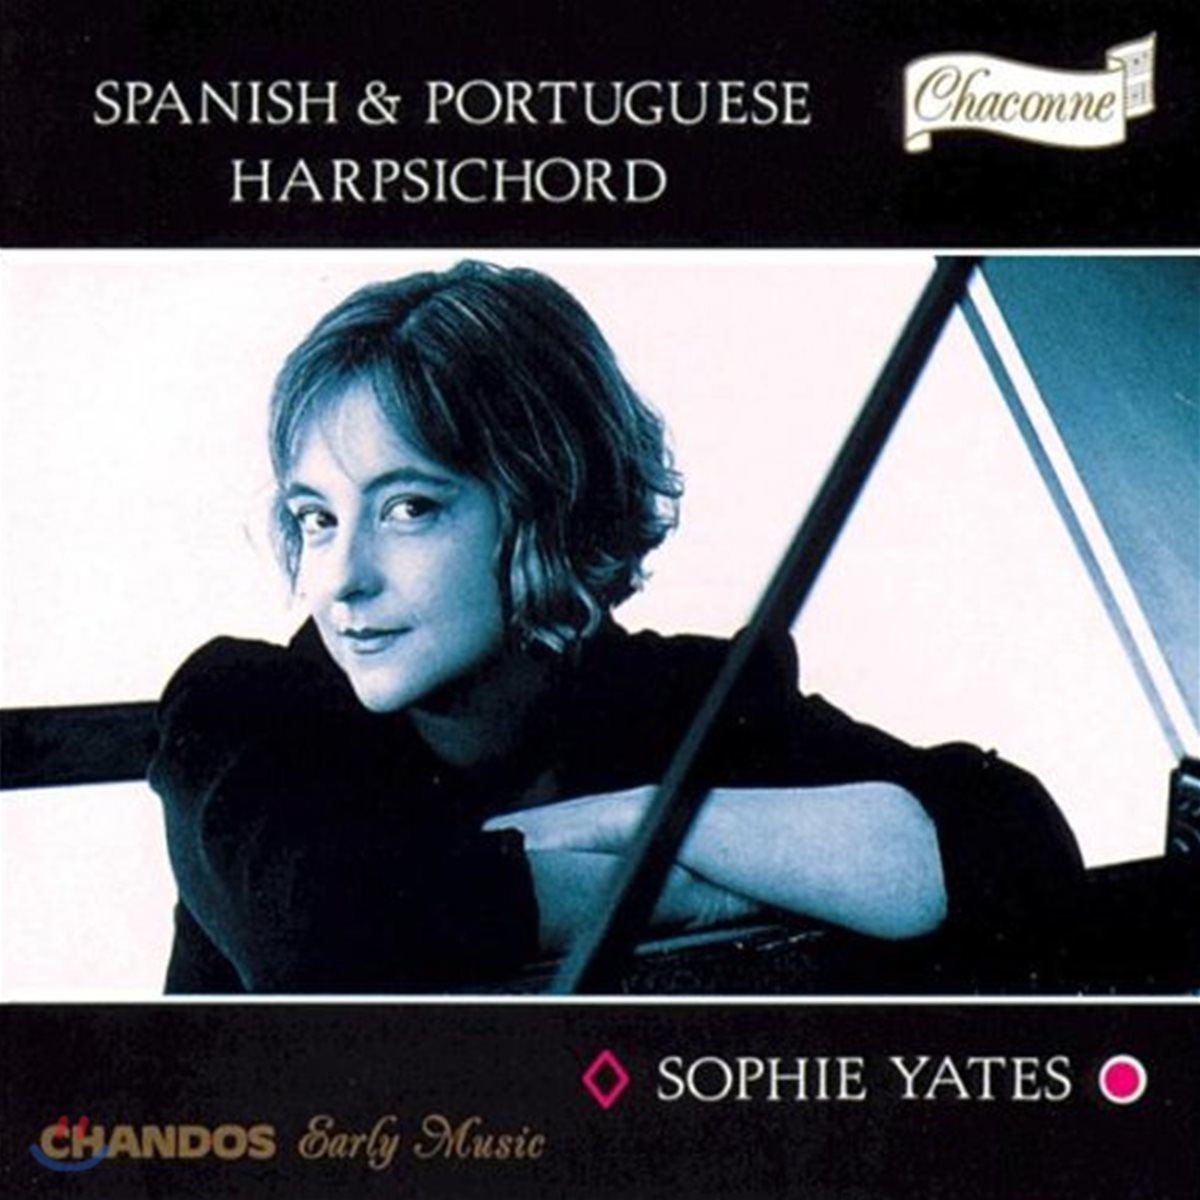 Sophie Yates 스페인 / 포르투갈의 하프시스코드 음악 - 소피 예이츠 (Spanish & Portuguese Harpsichord)